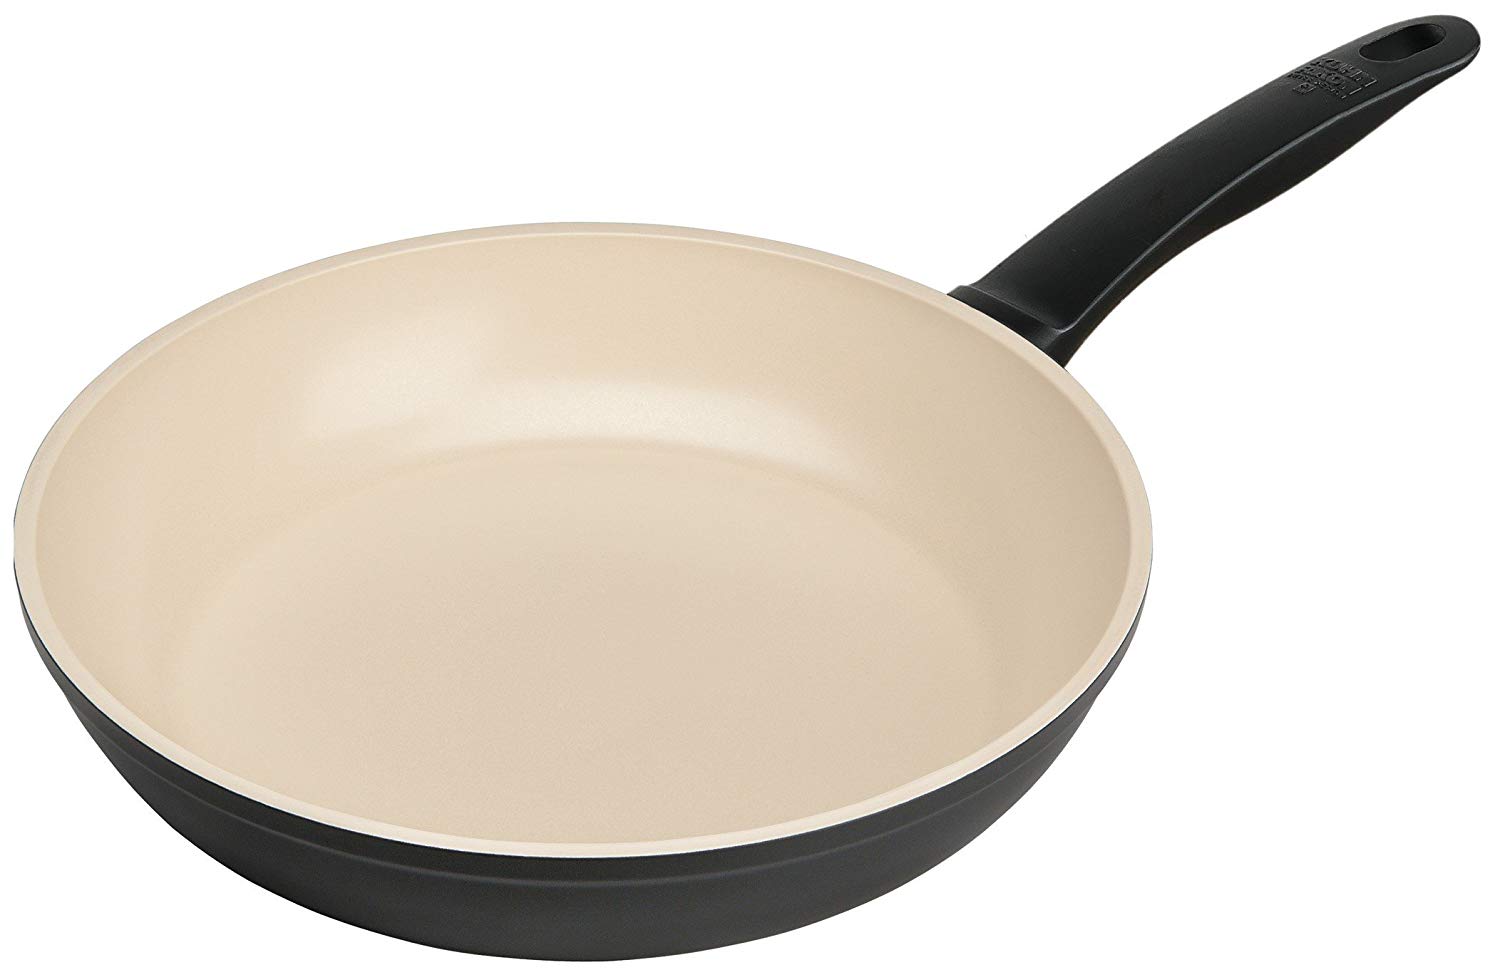 Kuhn Rikon 22 Cm Easy Ceramic Induction Frying Pan, Black